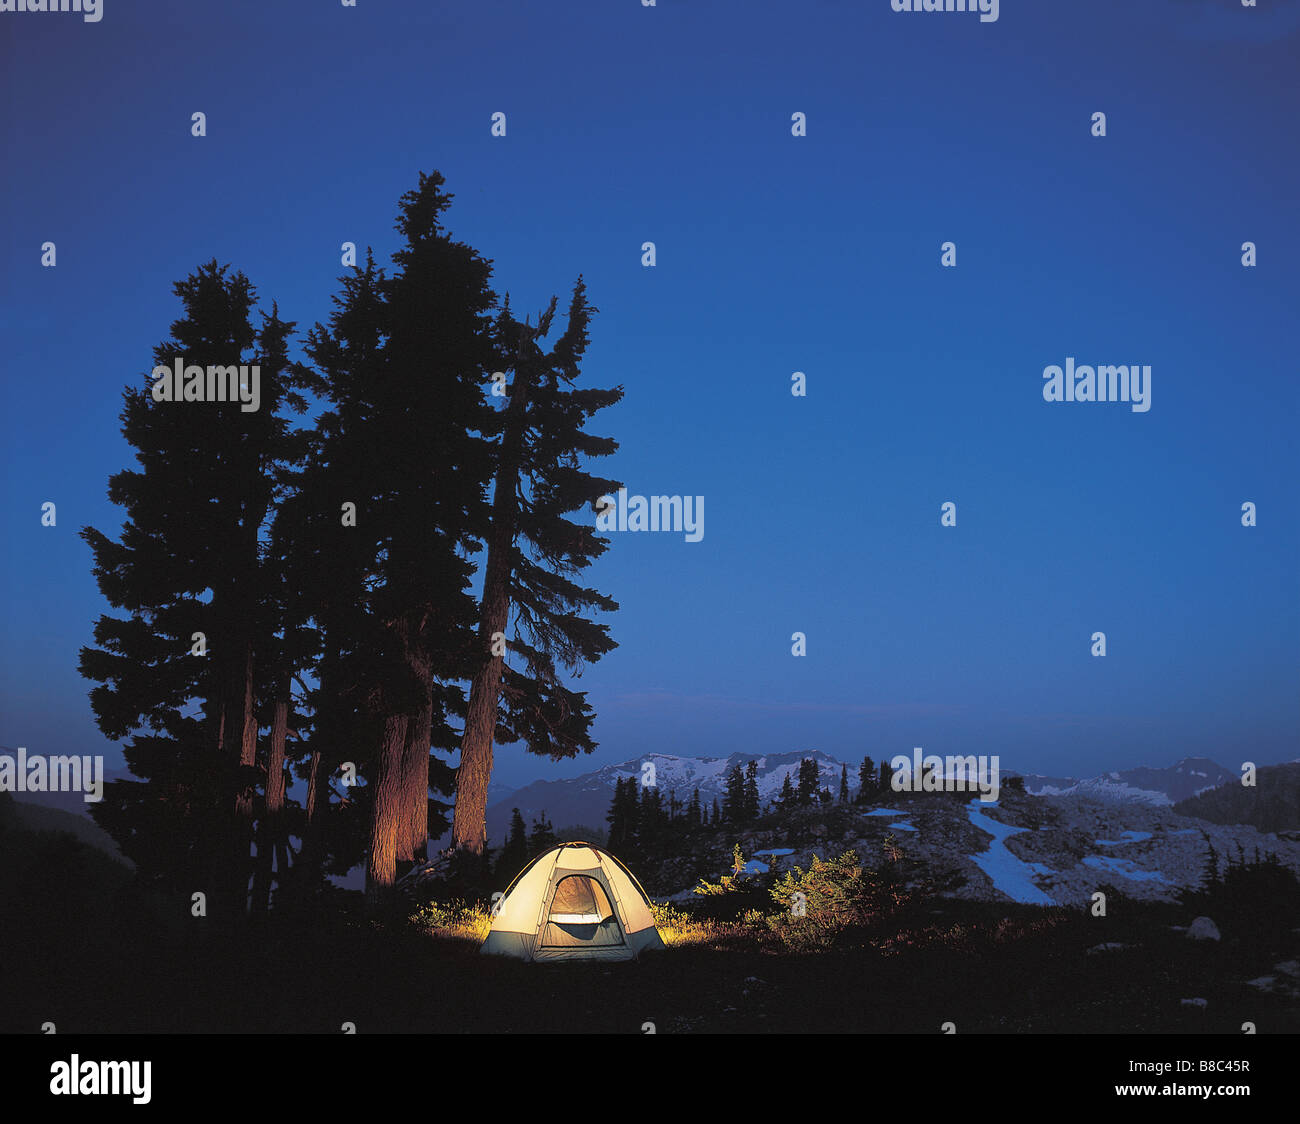 FL5491, David Nunuk; Beleuchteten Zelt Campingplatz Nacht, Tantalus Range, BC Stockfoto